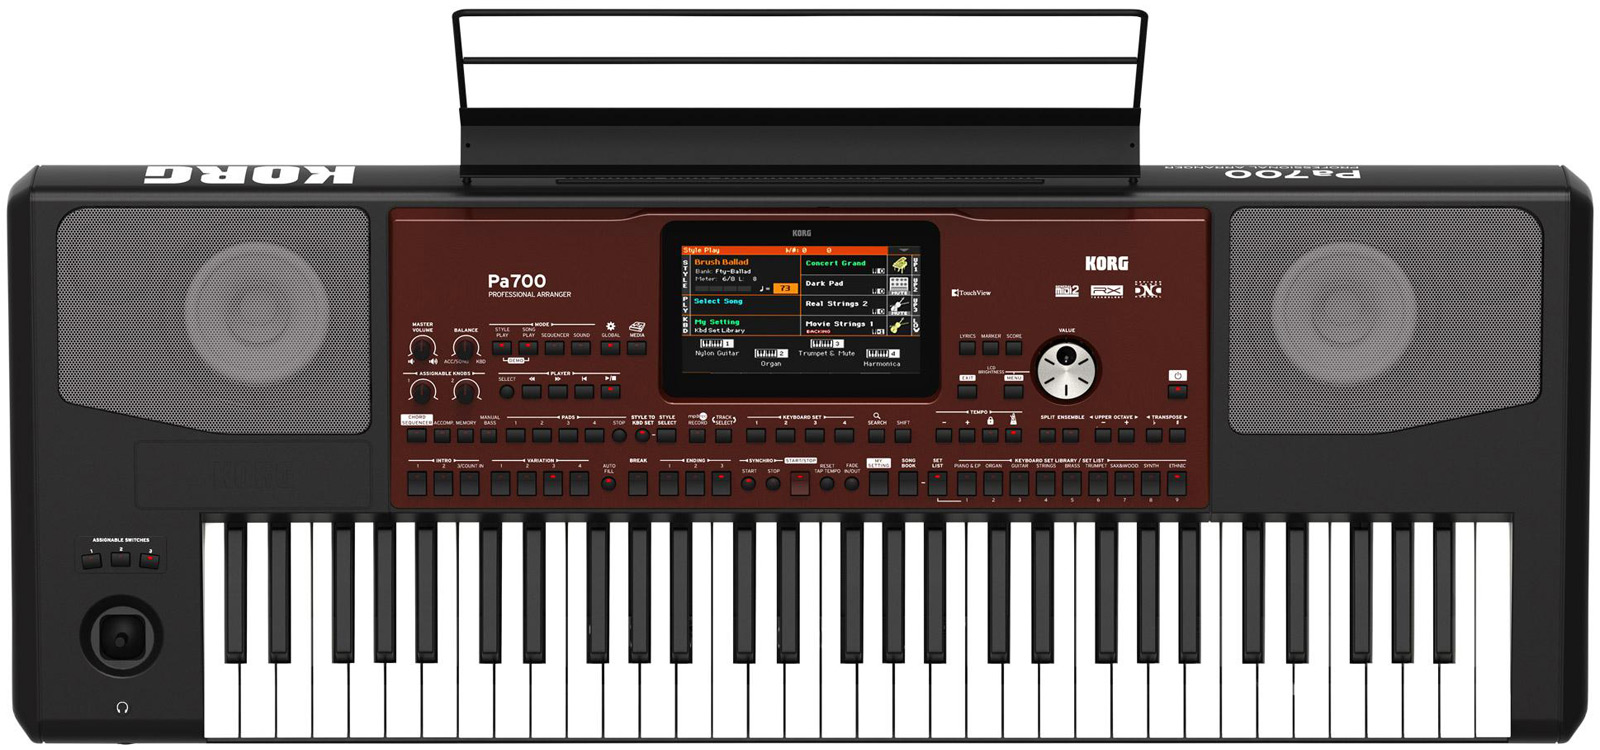 KORG Pa700 Musik MIDI Keyboard - Professional Arranger (Music Entertainer Workstation)